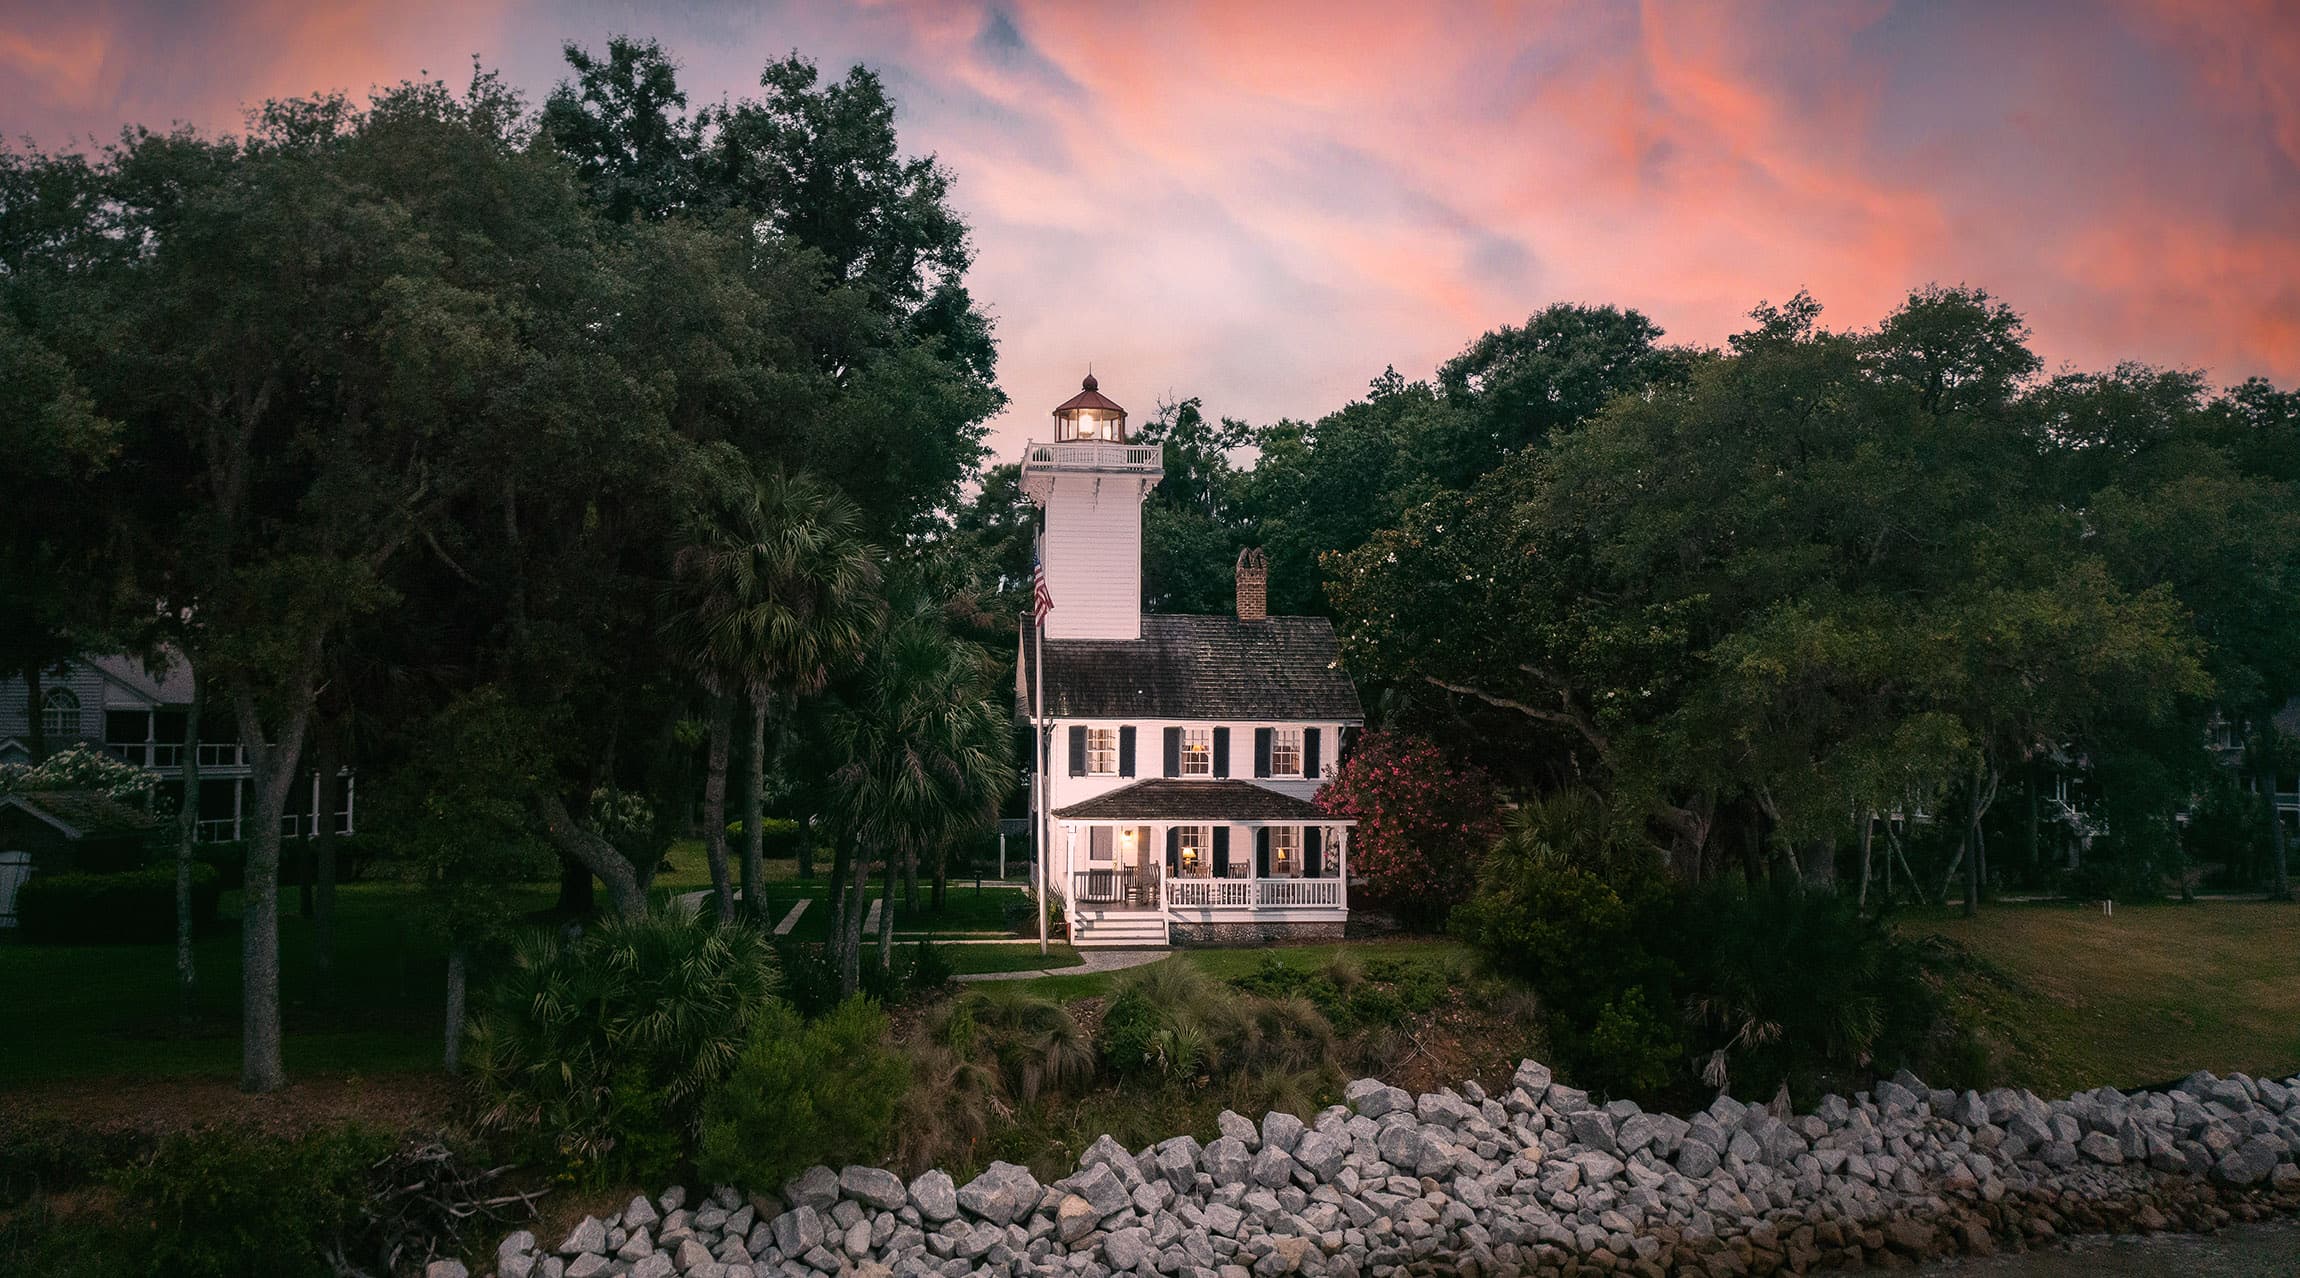 Historic Lighthouse